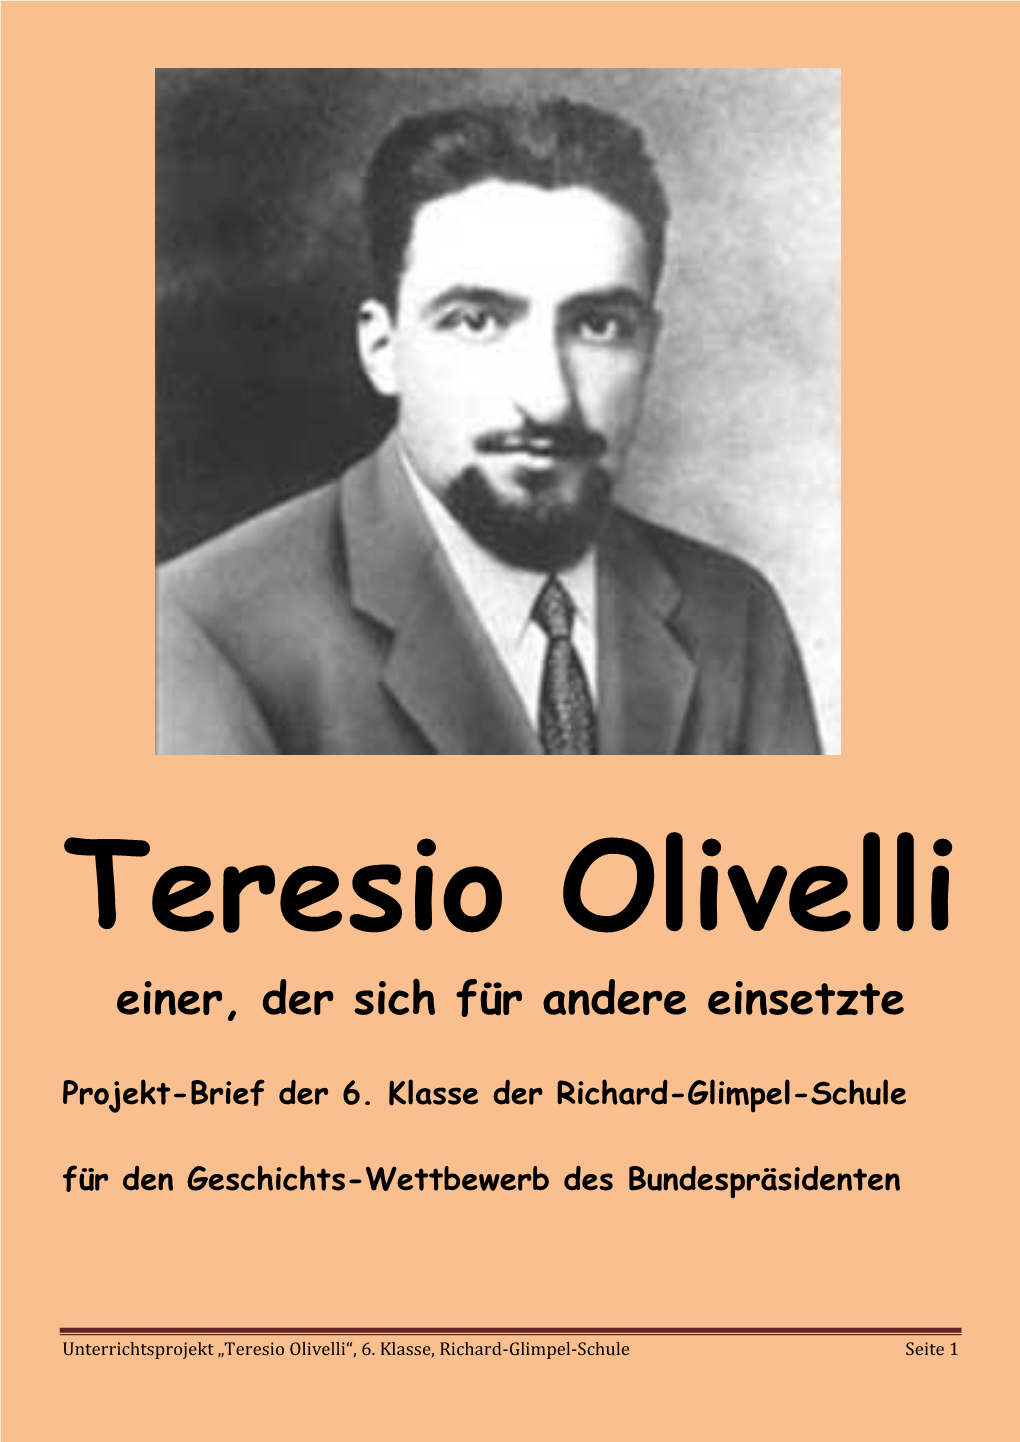 Teresio Olivelli